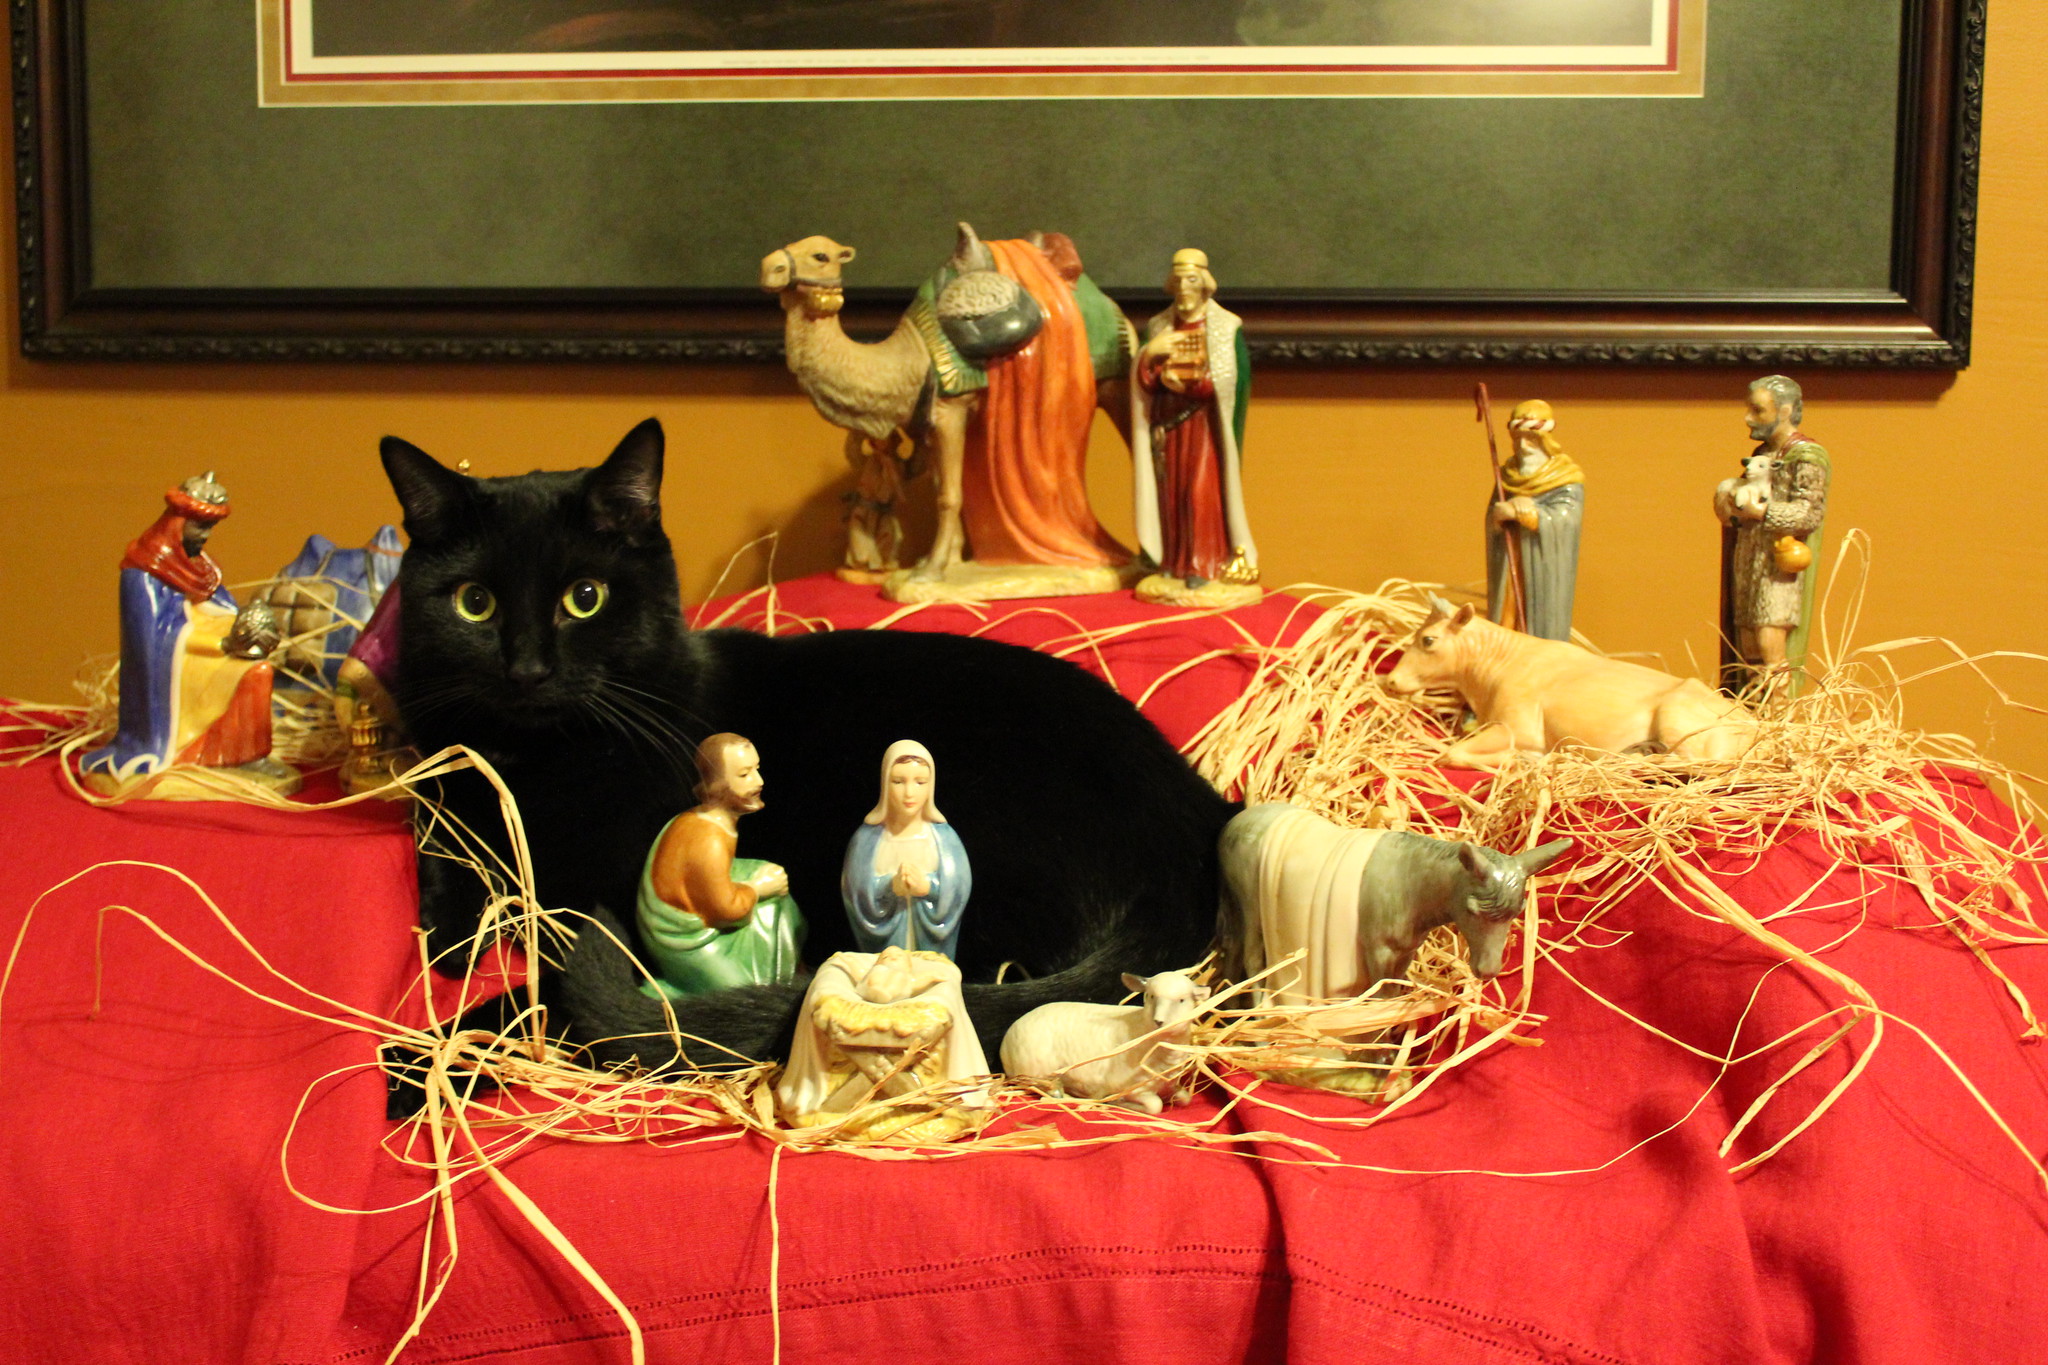 Our cat Porter Wagoner has joined the nativity scene